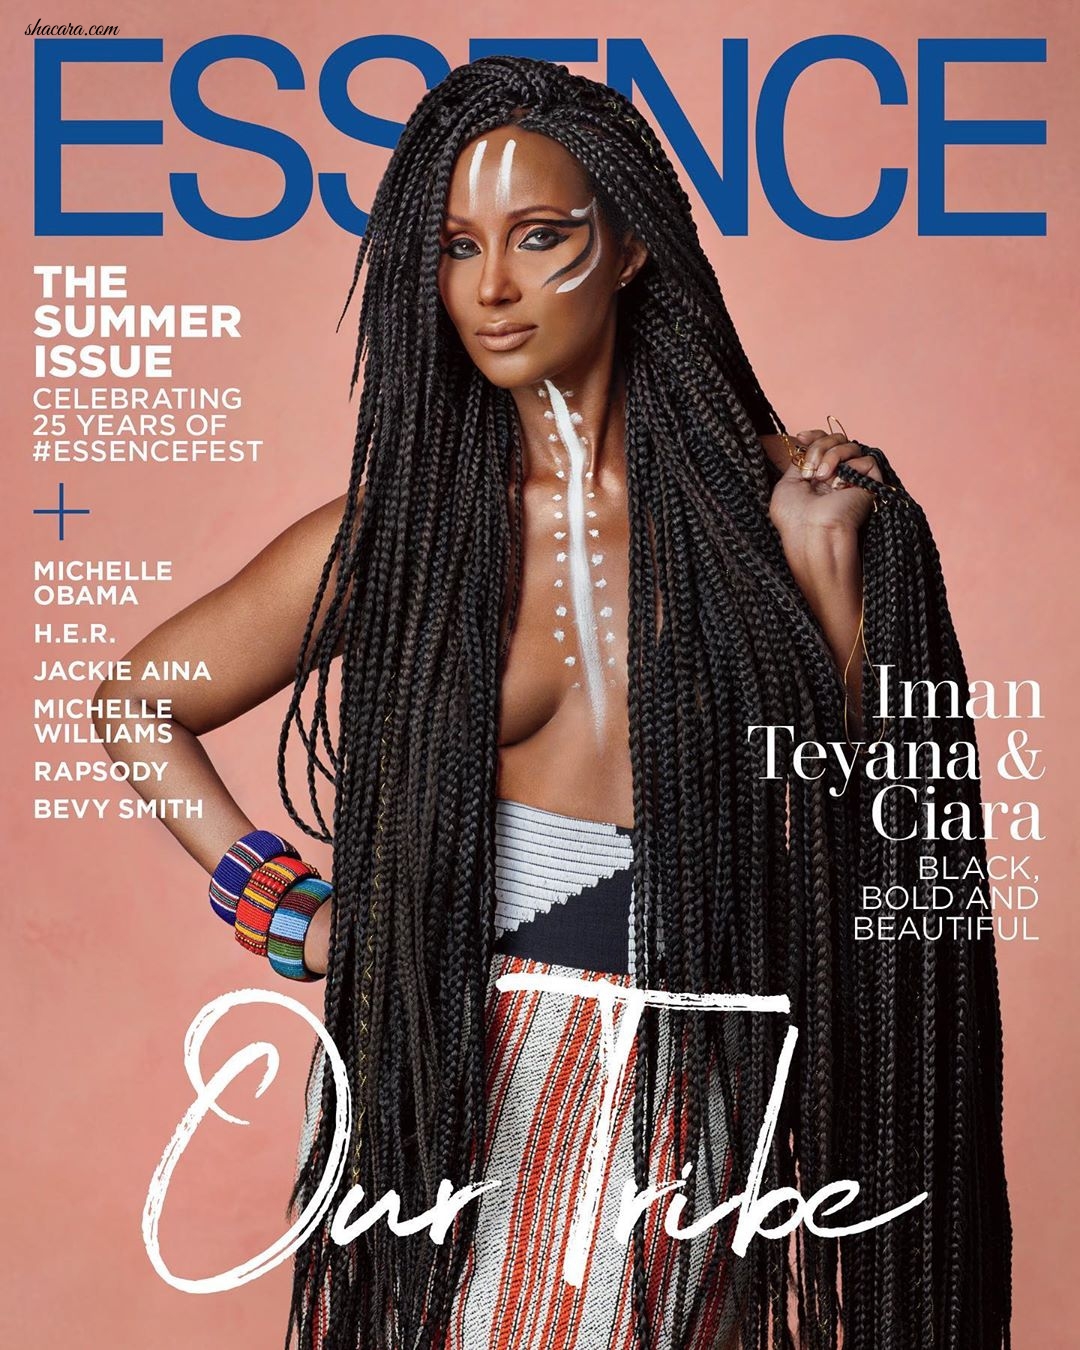 Legendary Model Iman, Ciara & Tenya Go All African In These Fabulous Essense Mag Covers